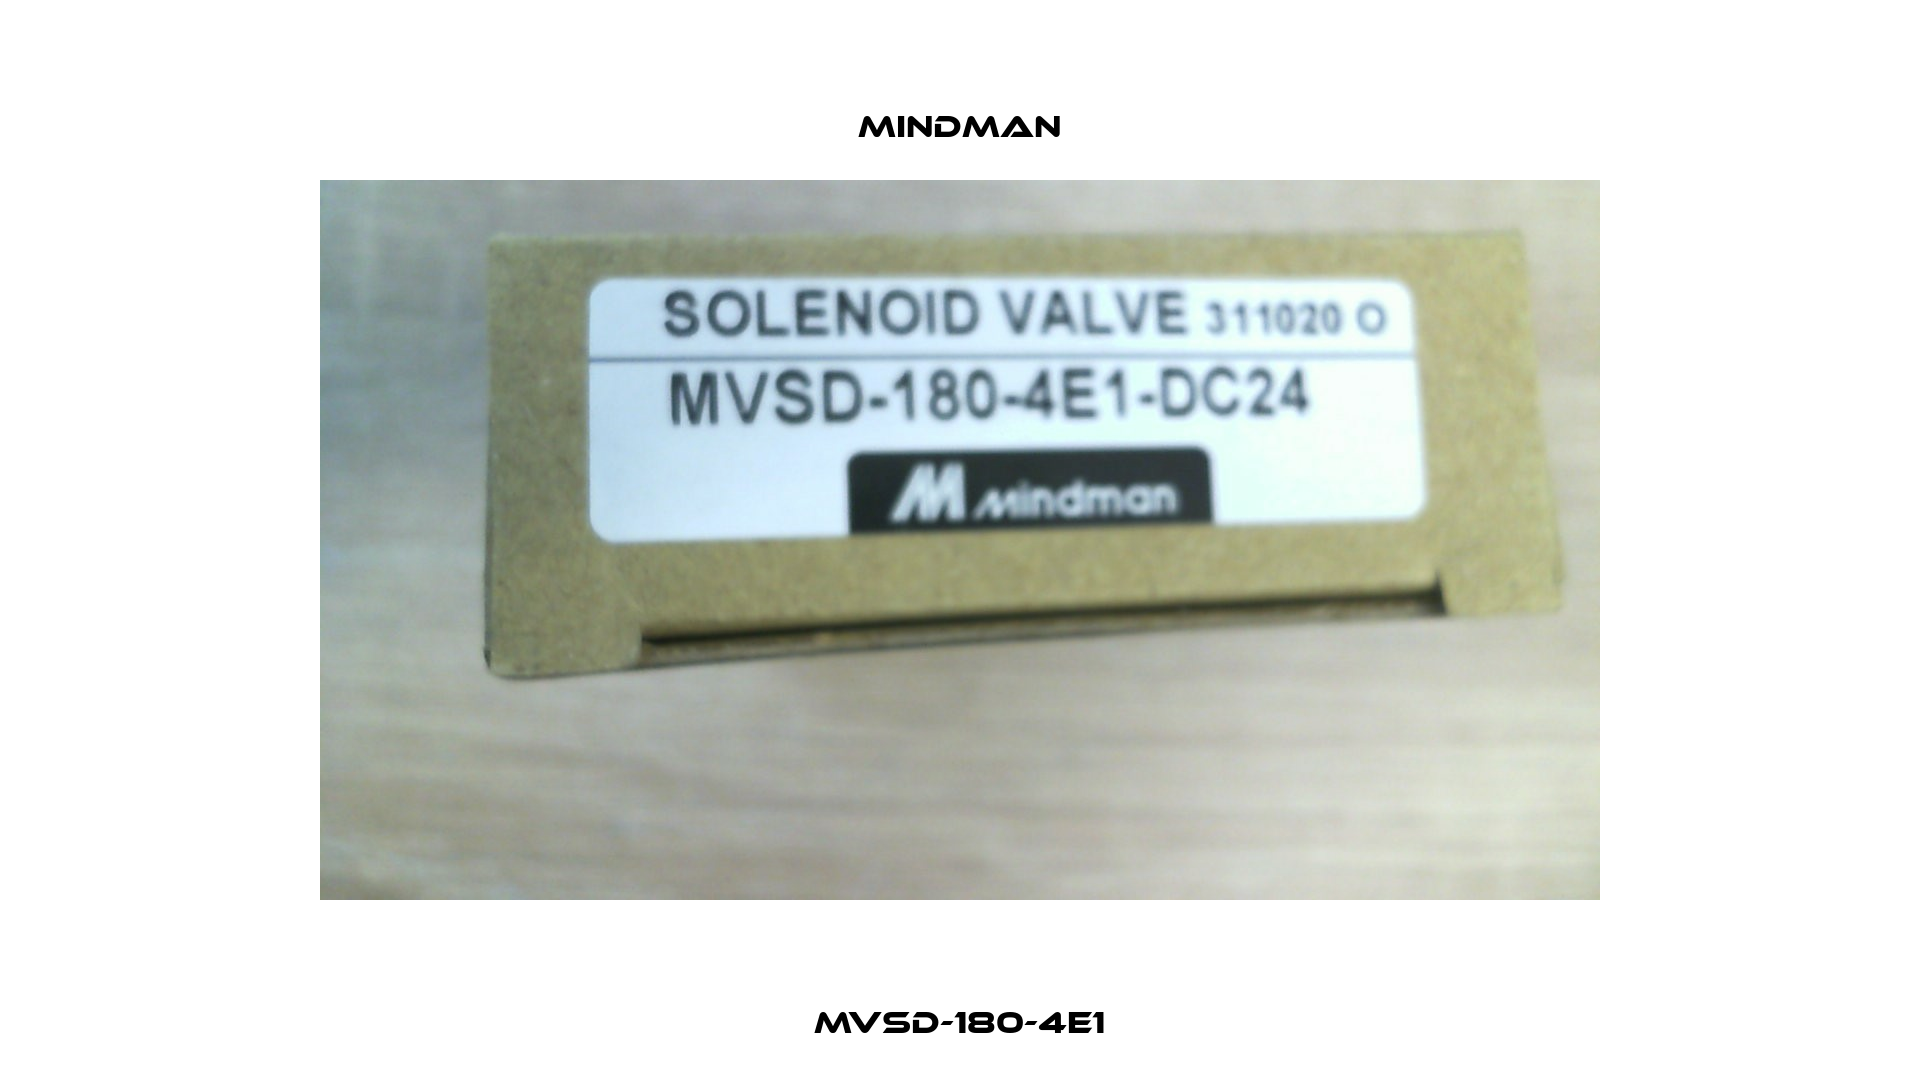 MVSD-180-4E1 Mindman